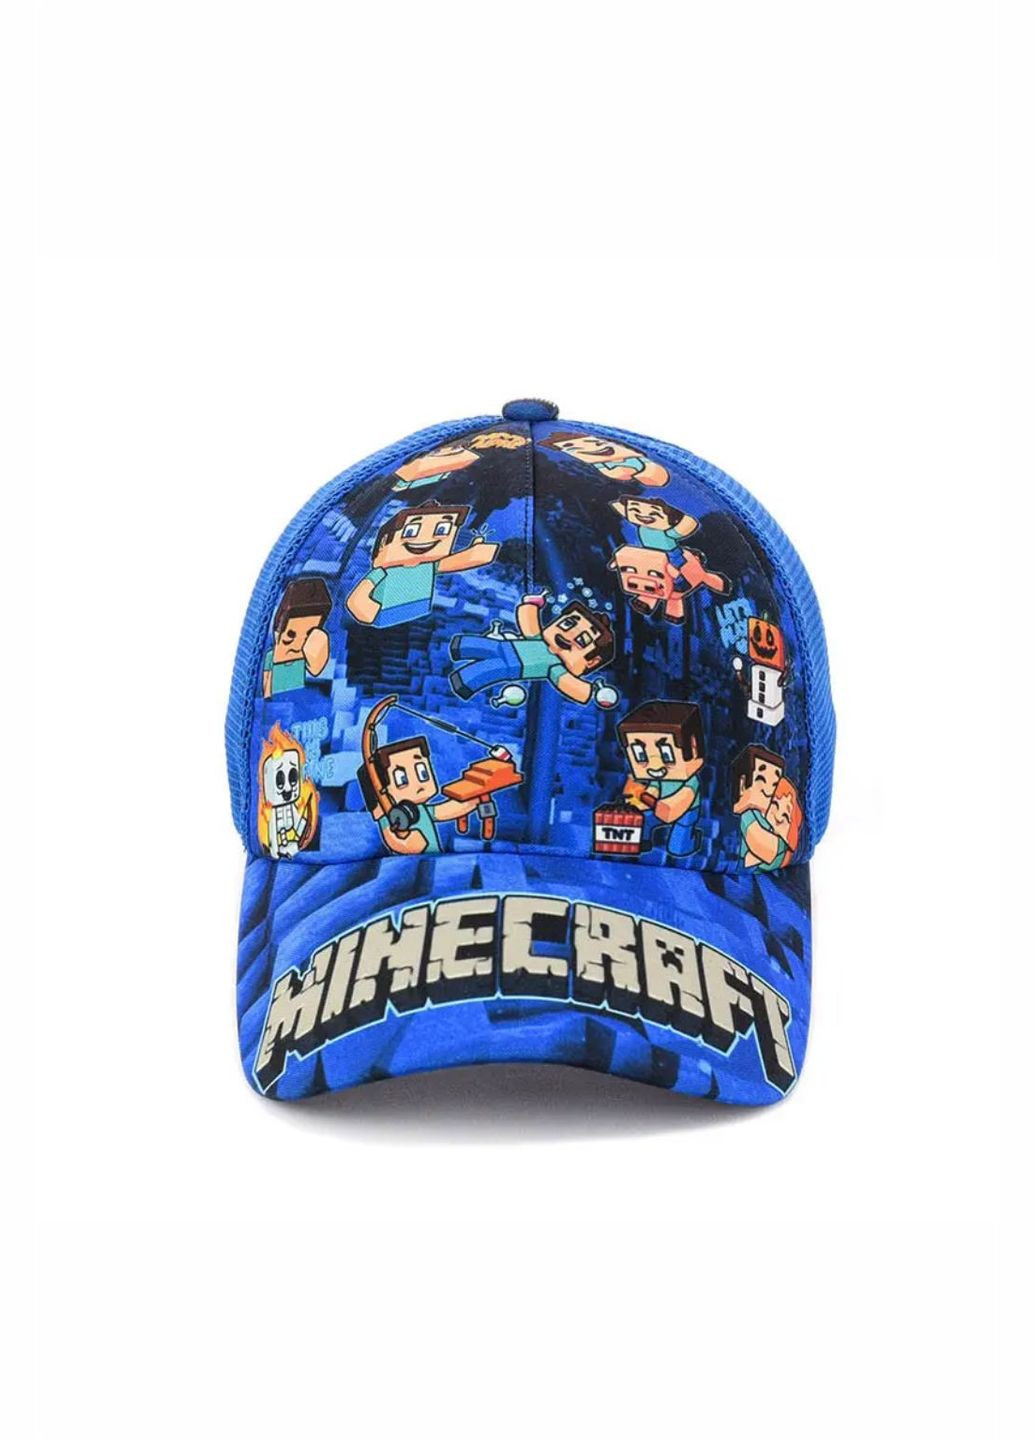 Кепка дитяча із сіткою Майнкрафт / Minecraft No Brand дитяча кепка (279381270)